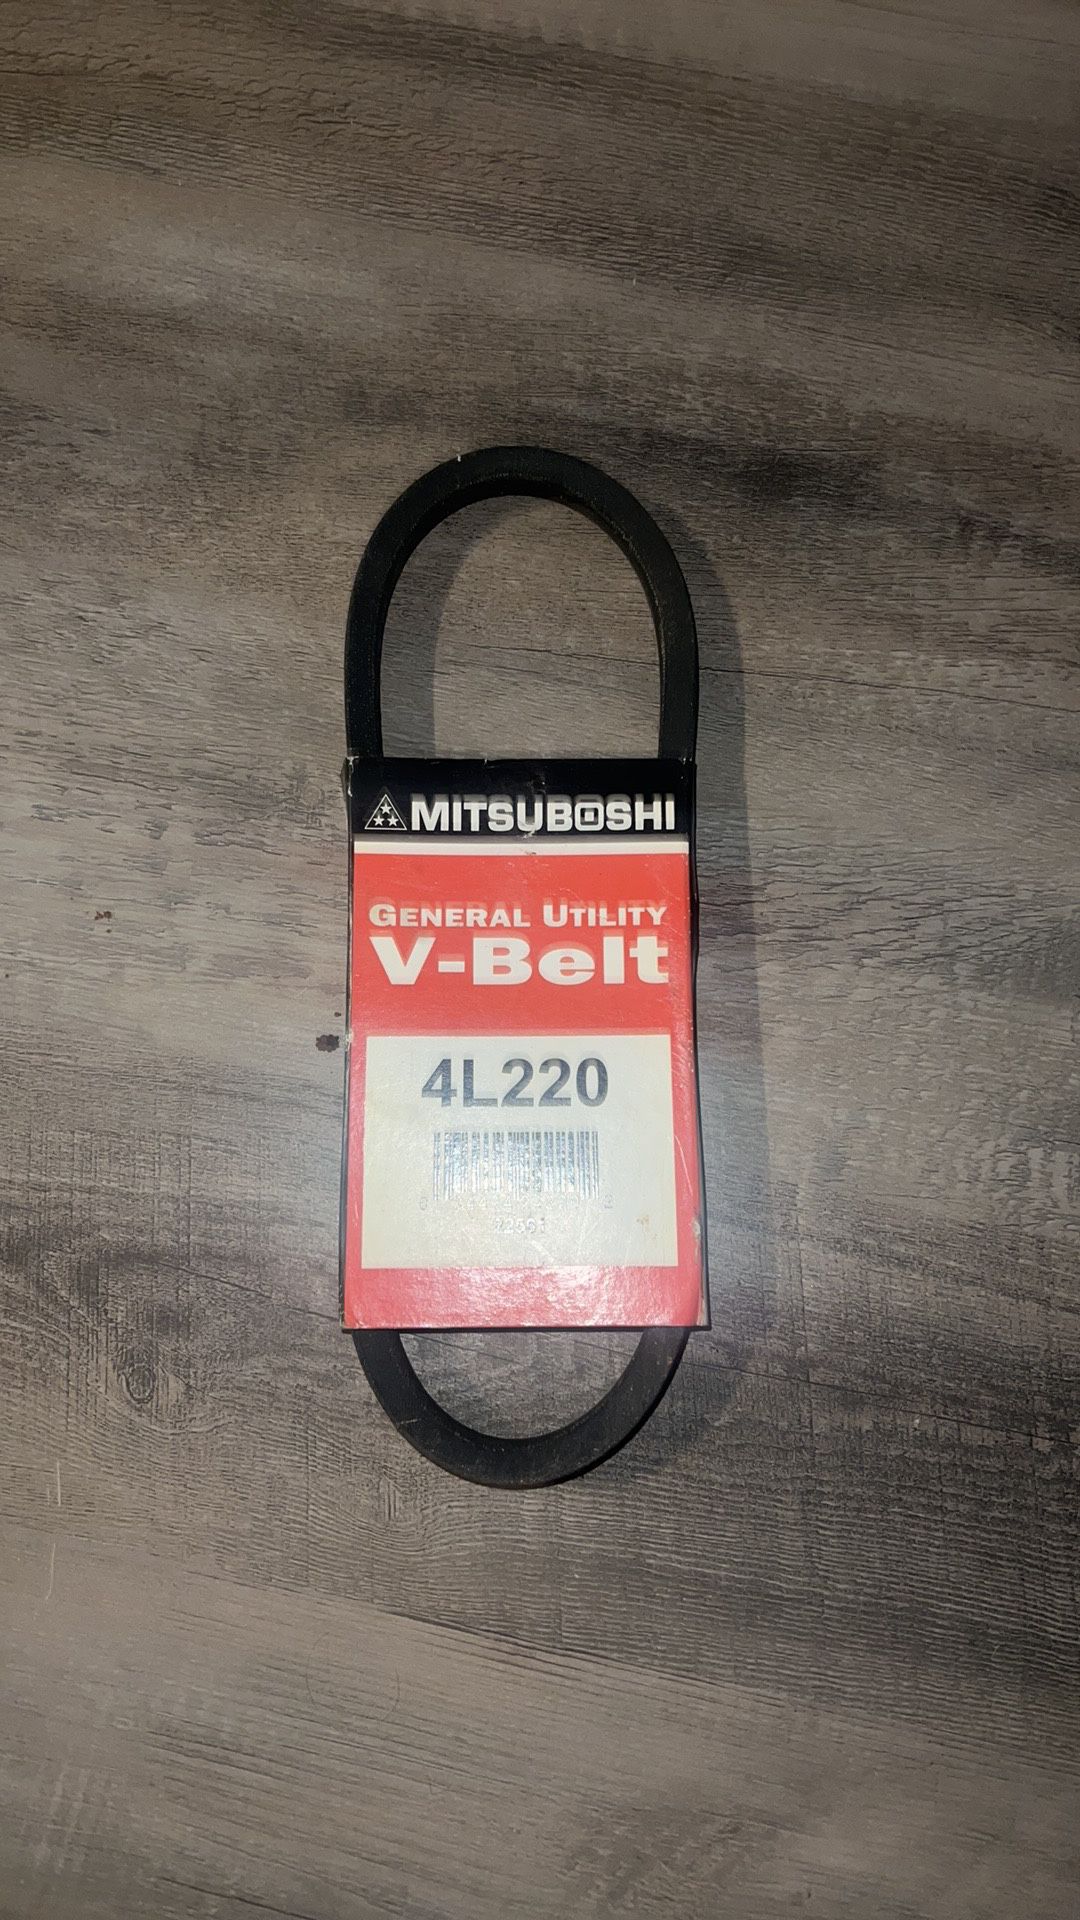 Mitsuboshi FHP 4L220 General Utility V-Belt 0.5 in. W x 22 in. L For Fractional Horsepower Motors